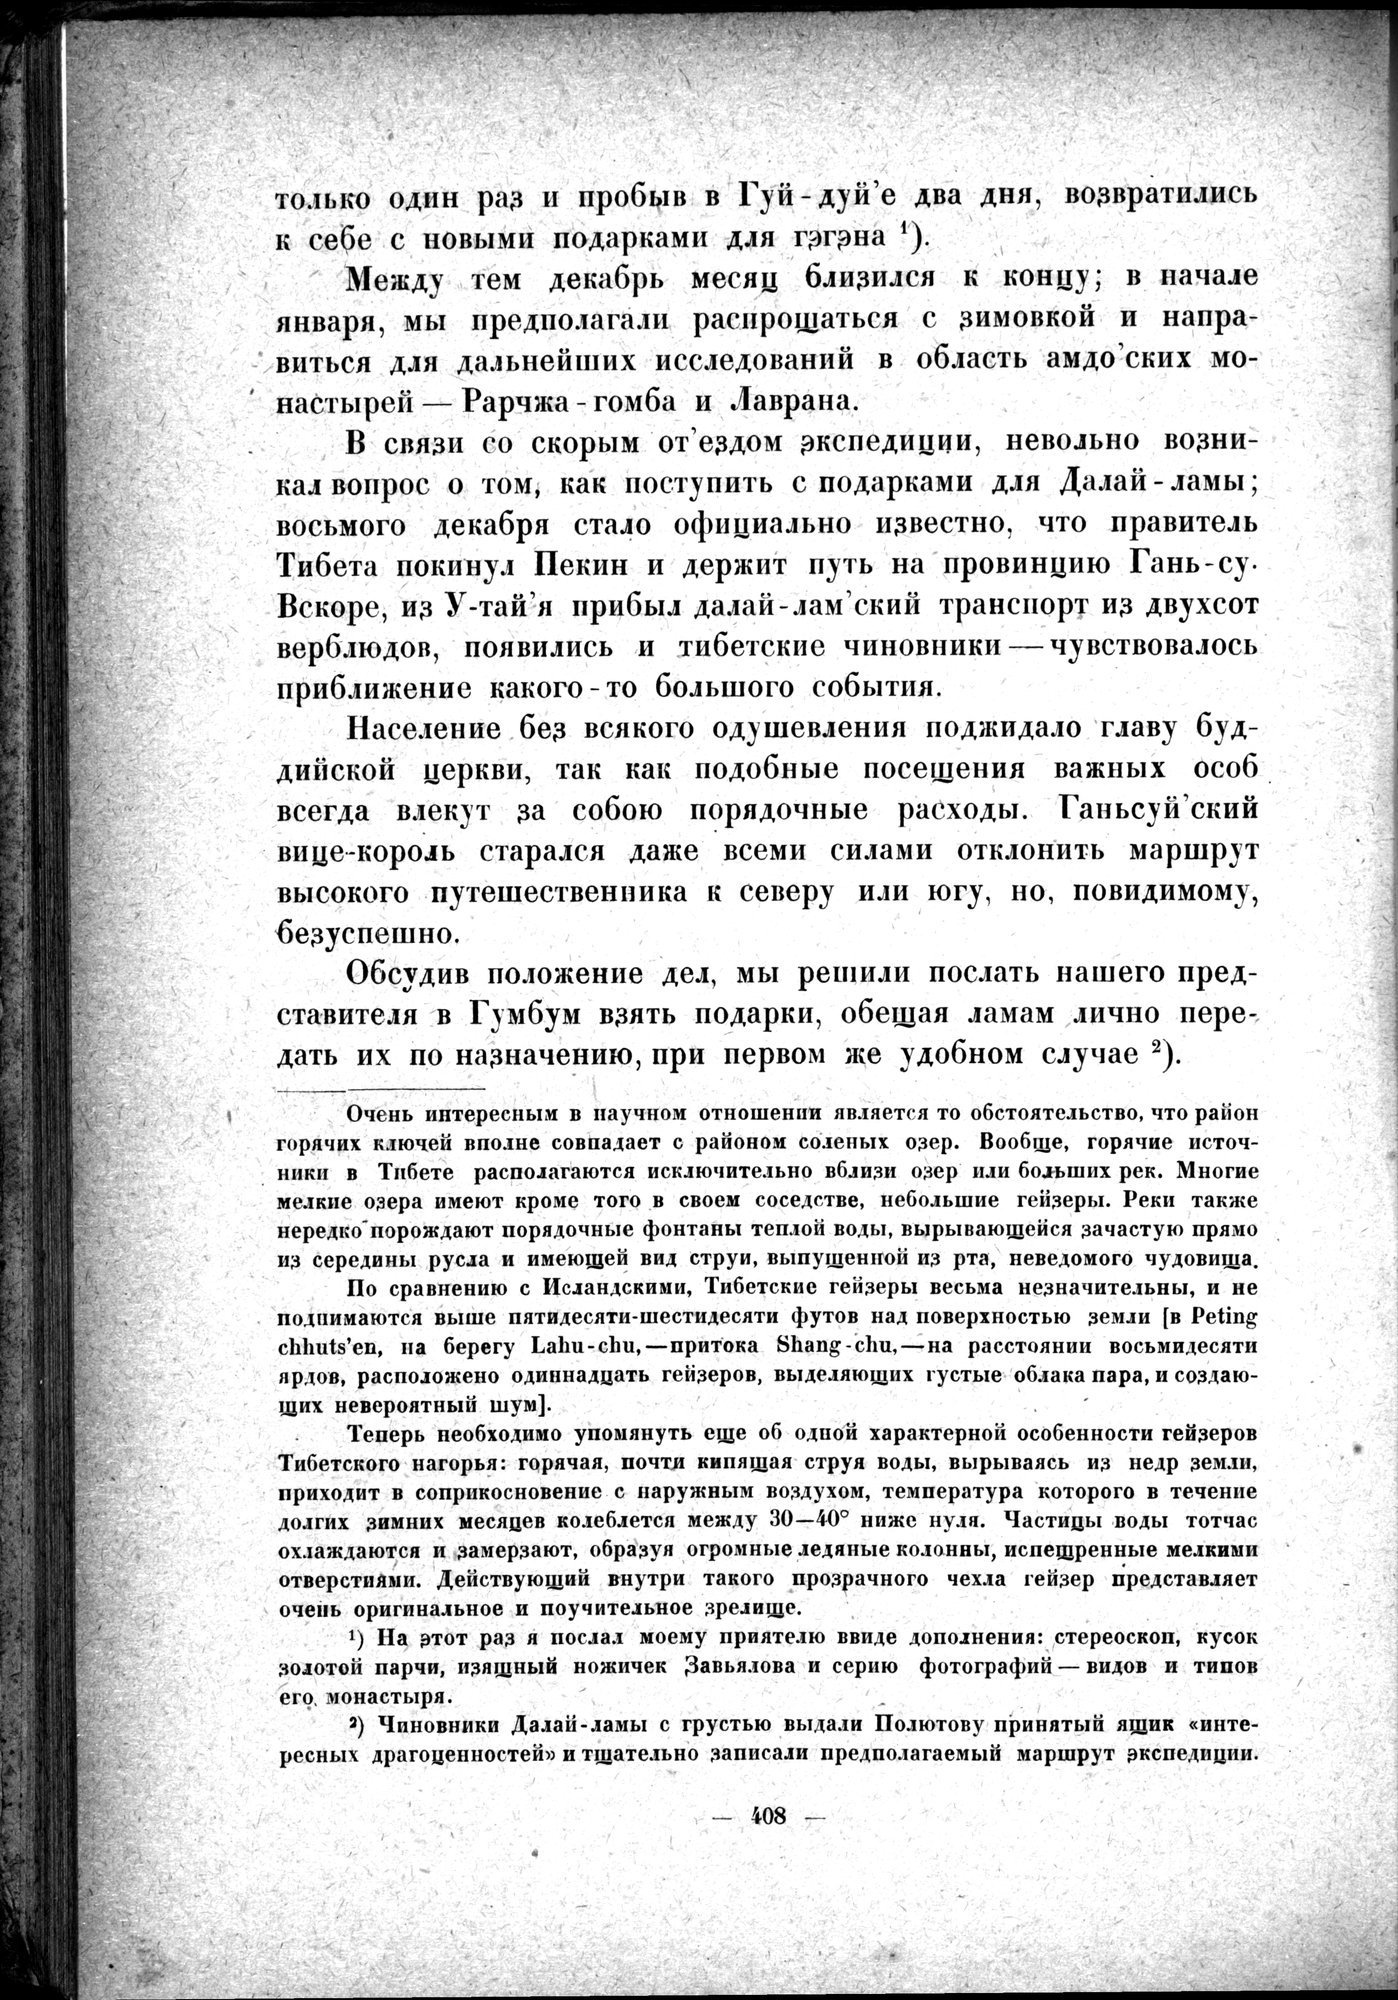 Mongoliya i Amdo i mertby gorod Khara-Khoto : vol.1 / Page 468 (Grayscale High Resolution Image)